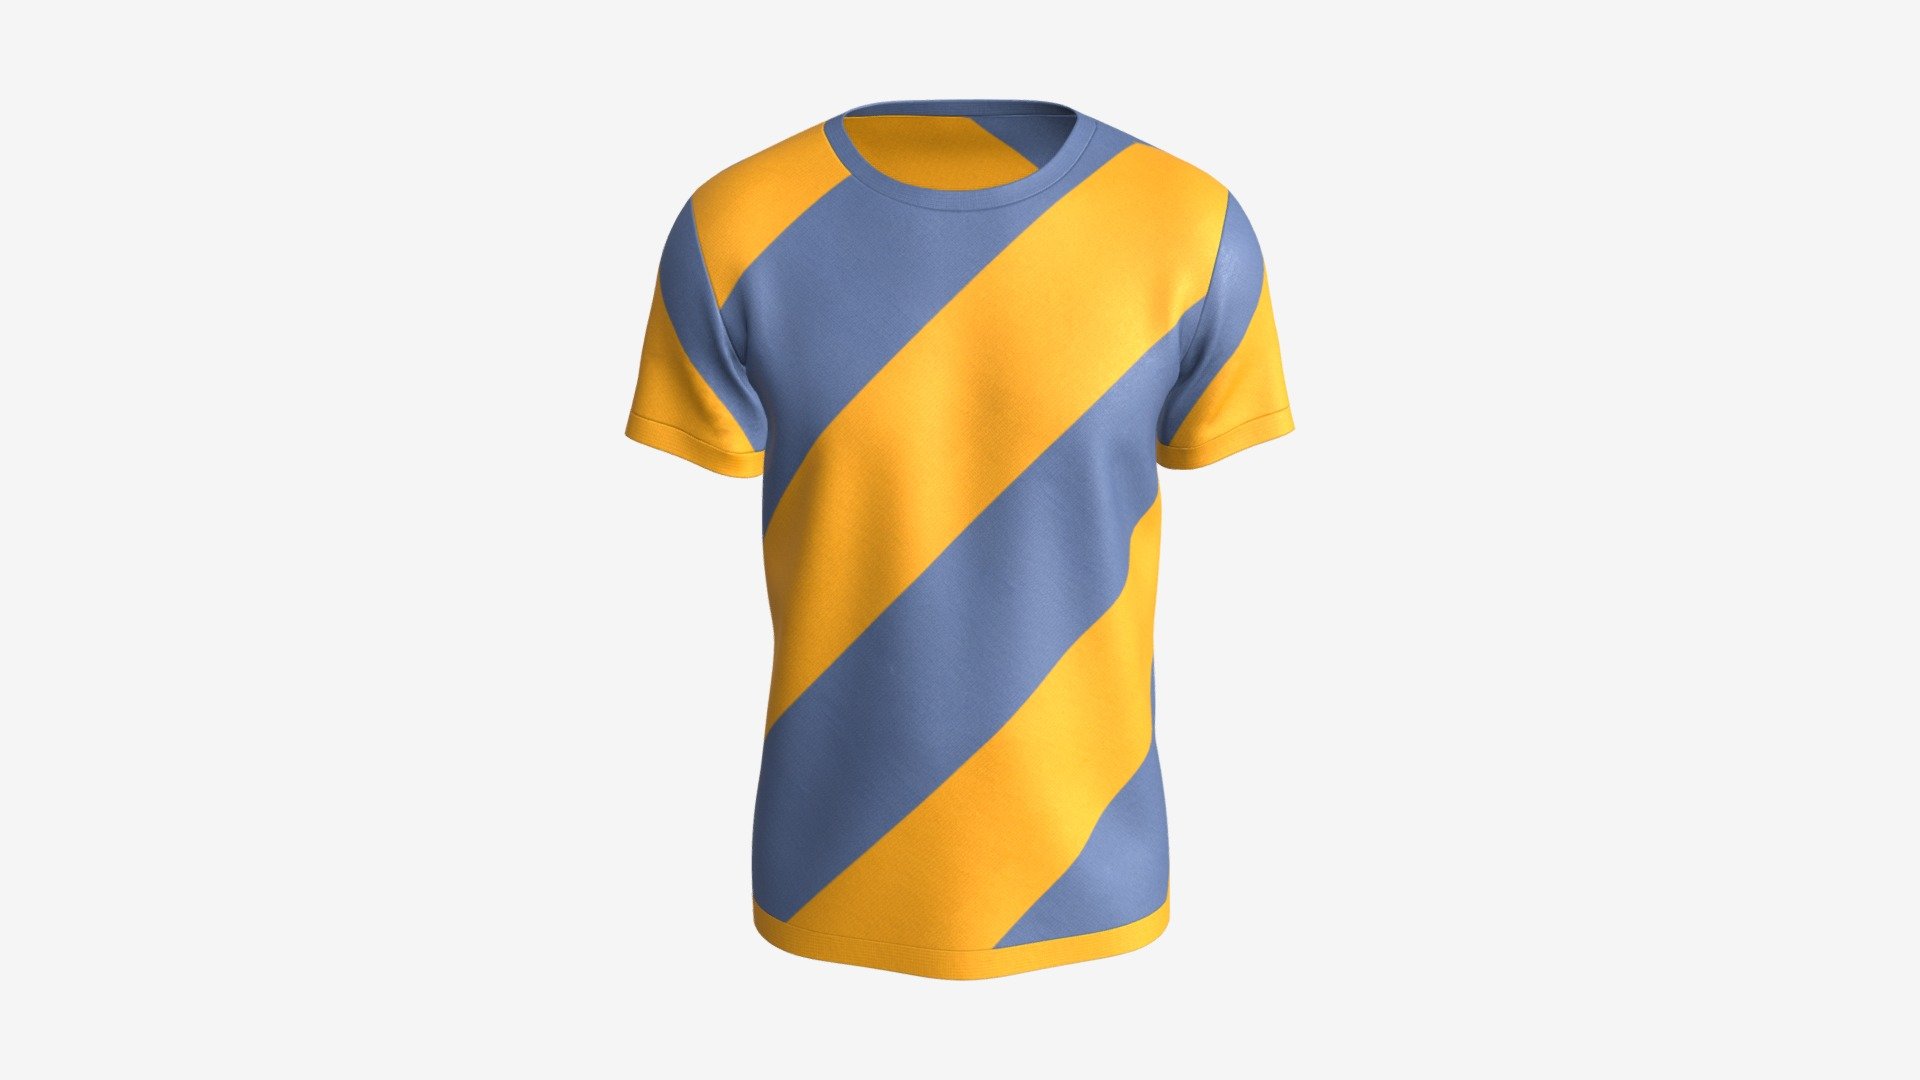 T-shirt for Men Mockup 01 Yellow Blue Stripes - Buy Royalty Free 3D ...